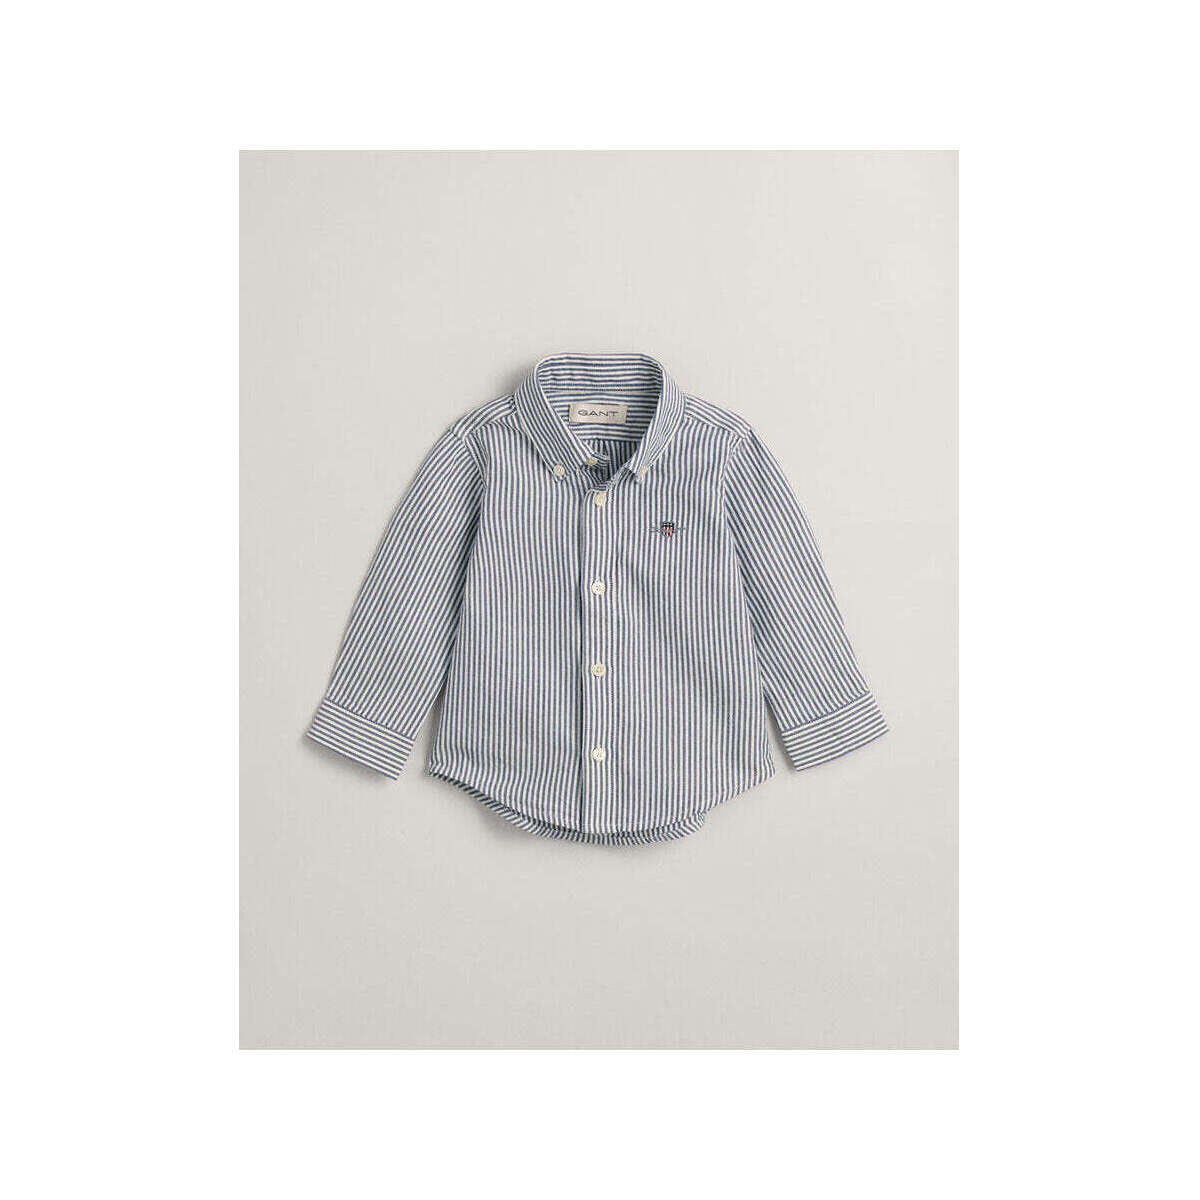 Textil Rapaz Camisas mangas comprida Gant Kids 530011-423-3-67 Azul